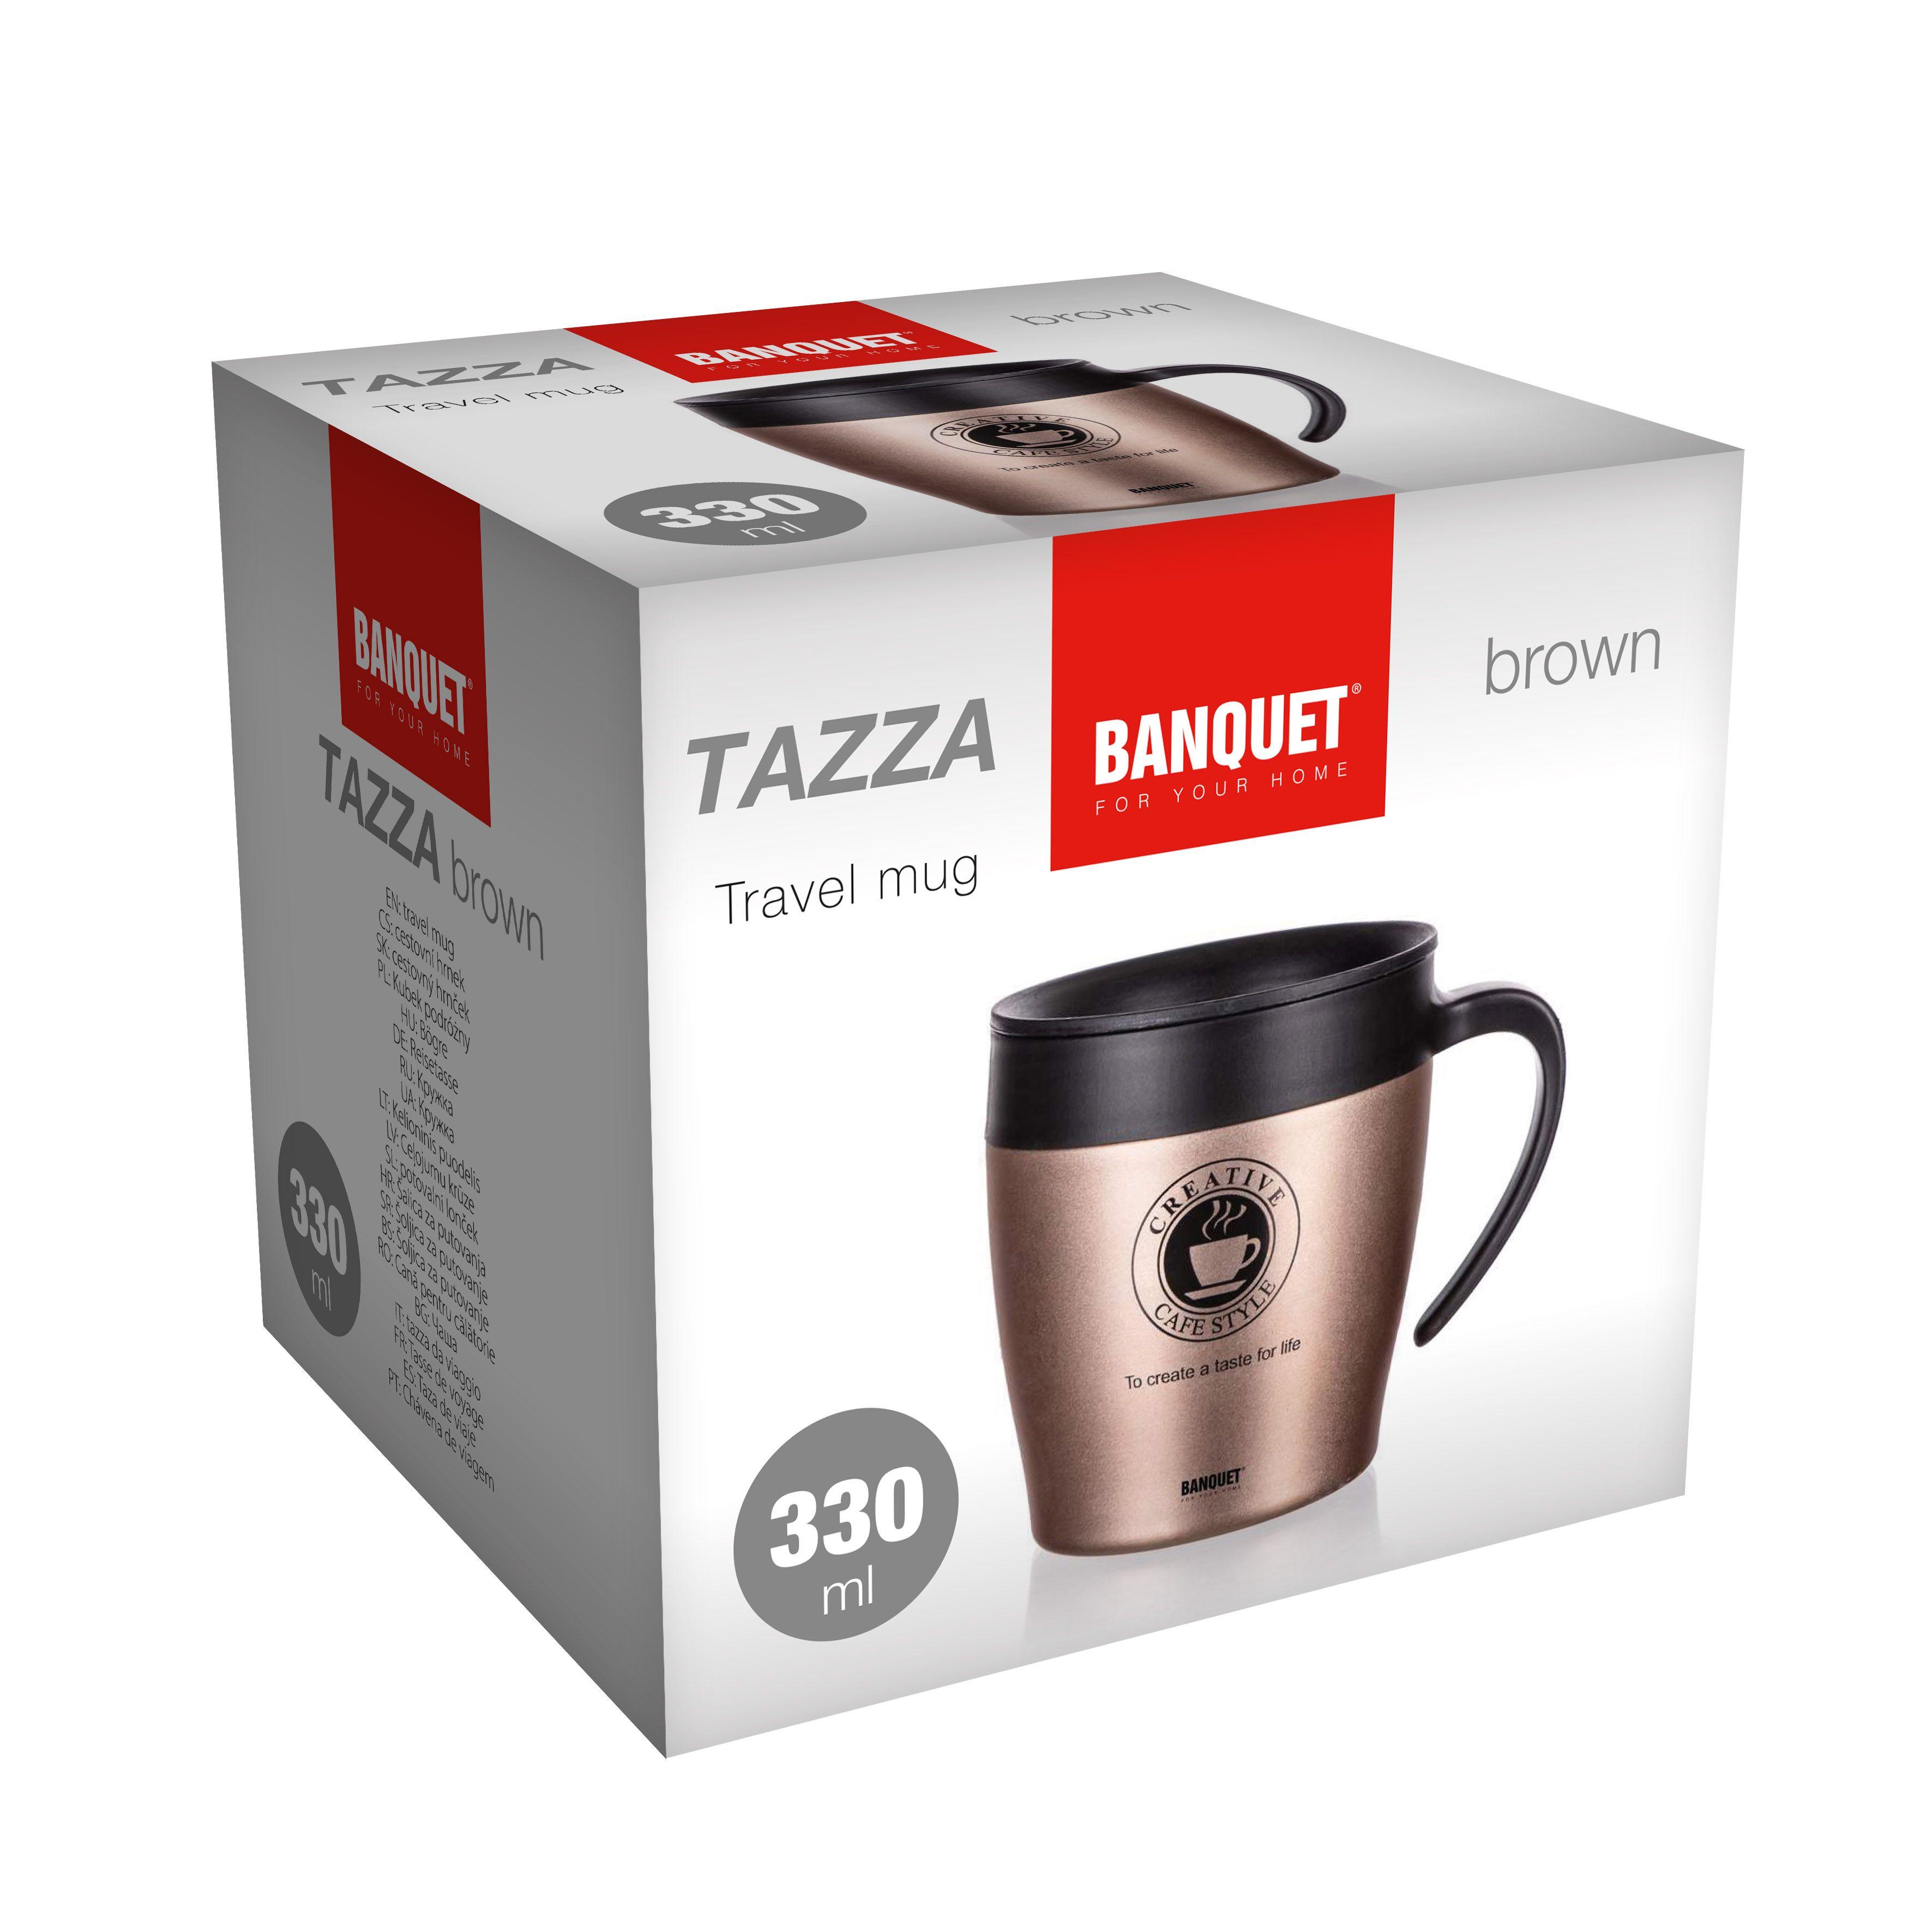 TAZZA 330 ml travel mug, brown